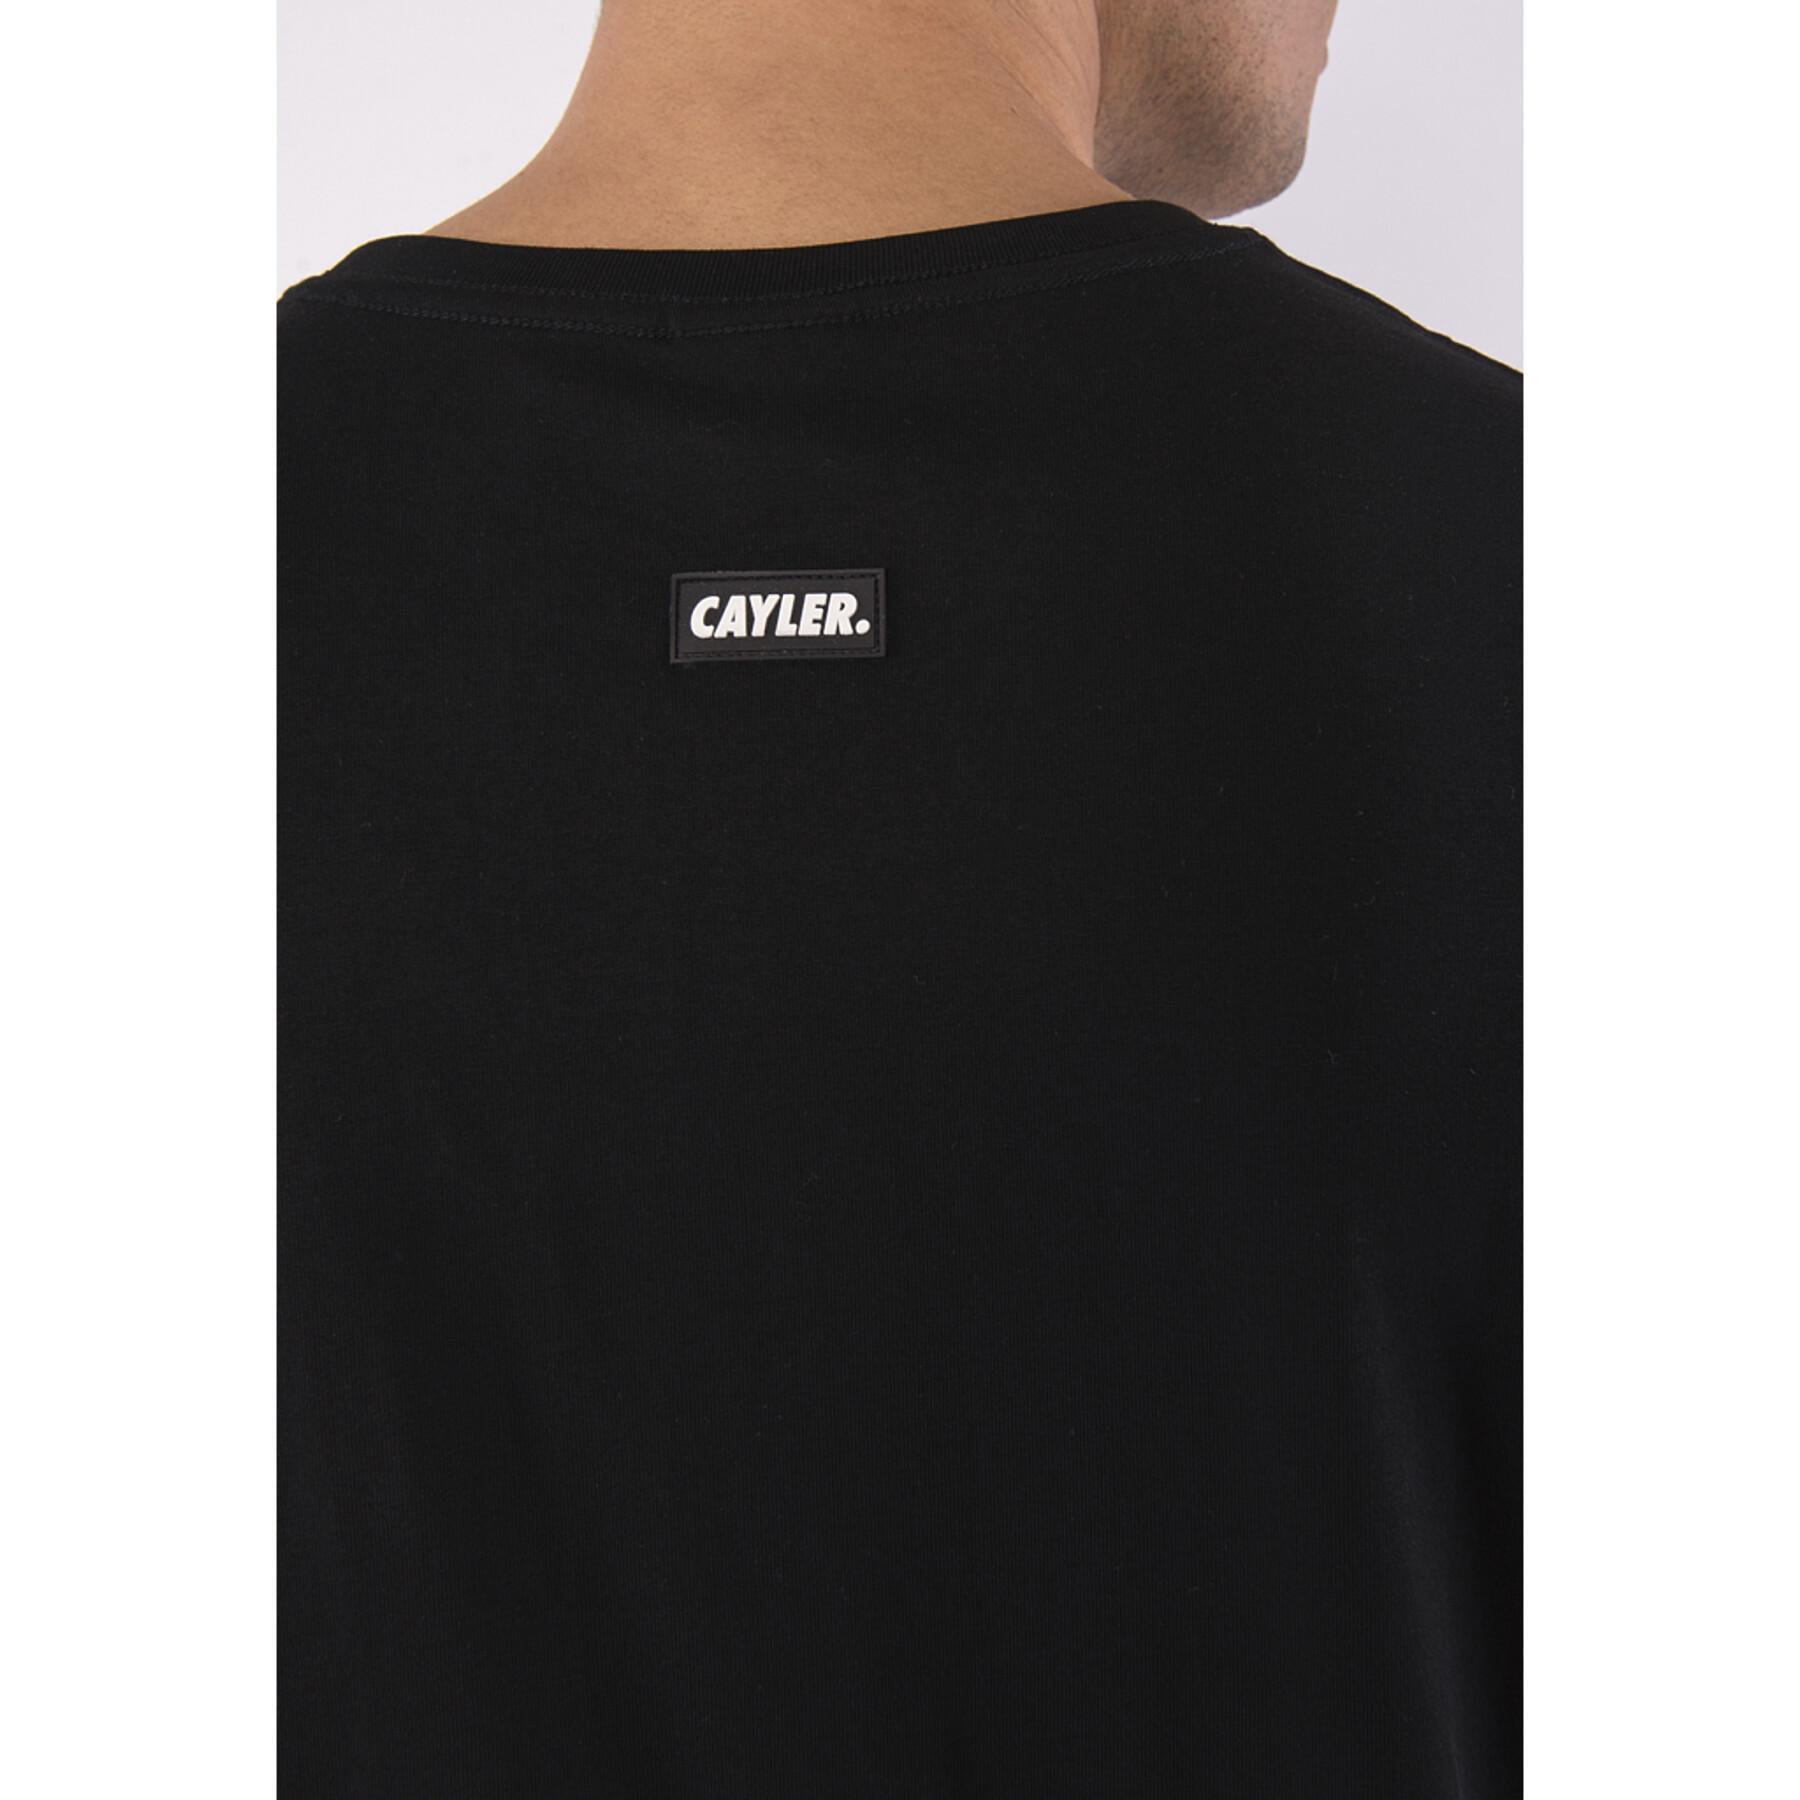 T-shirt Cayler & Sons WL Vibes GT